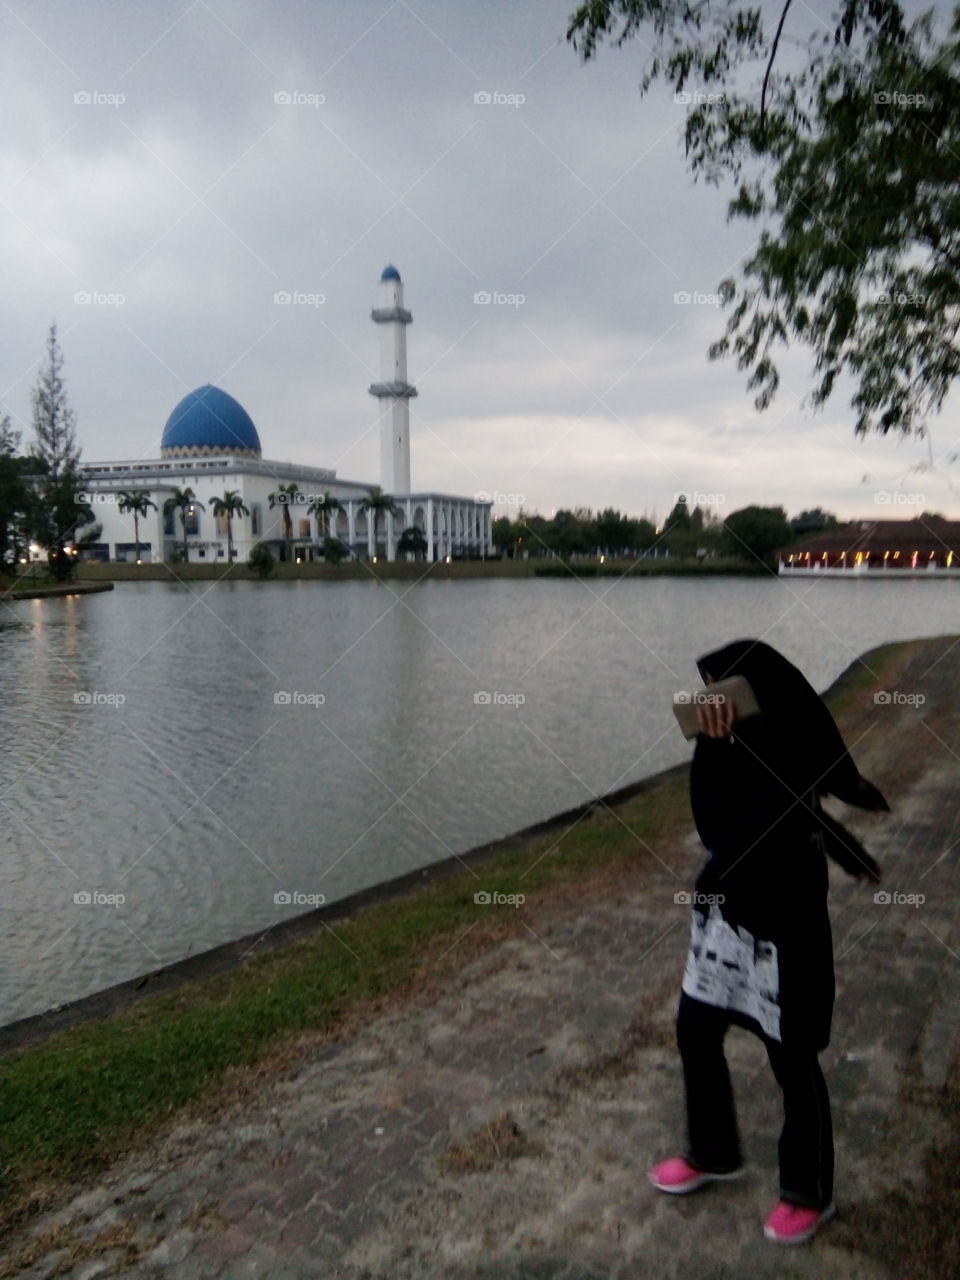 The evening panorama of UNITEN Mosque, Malaysia 🇲🇾